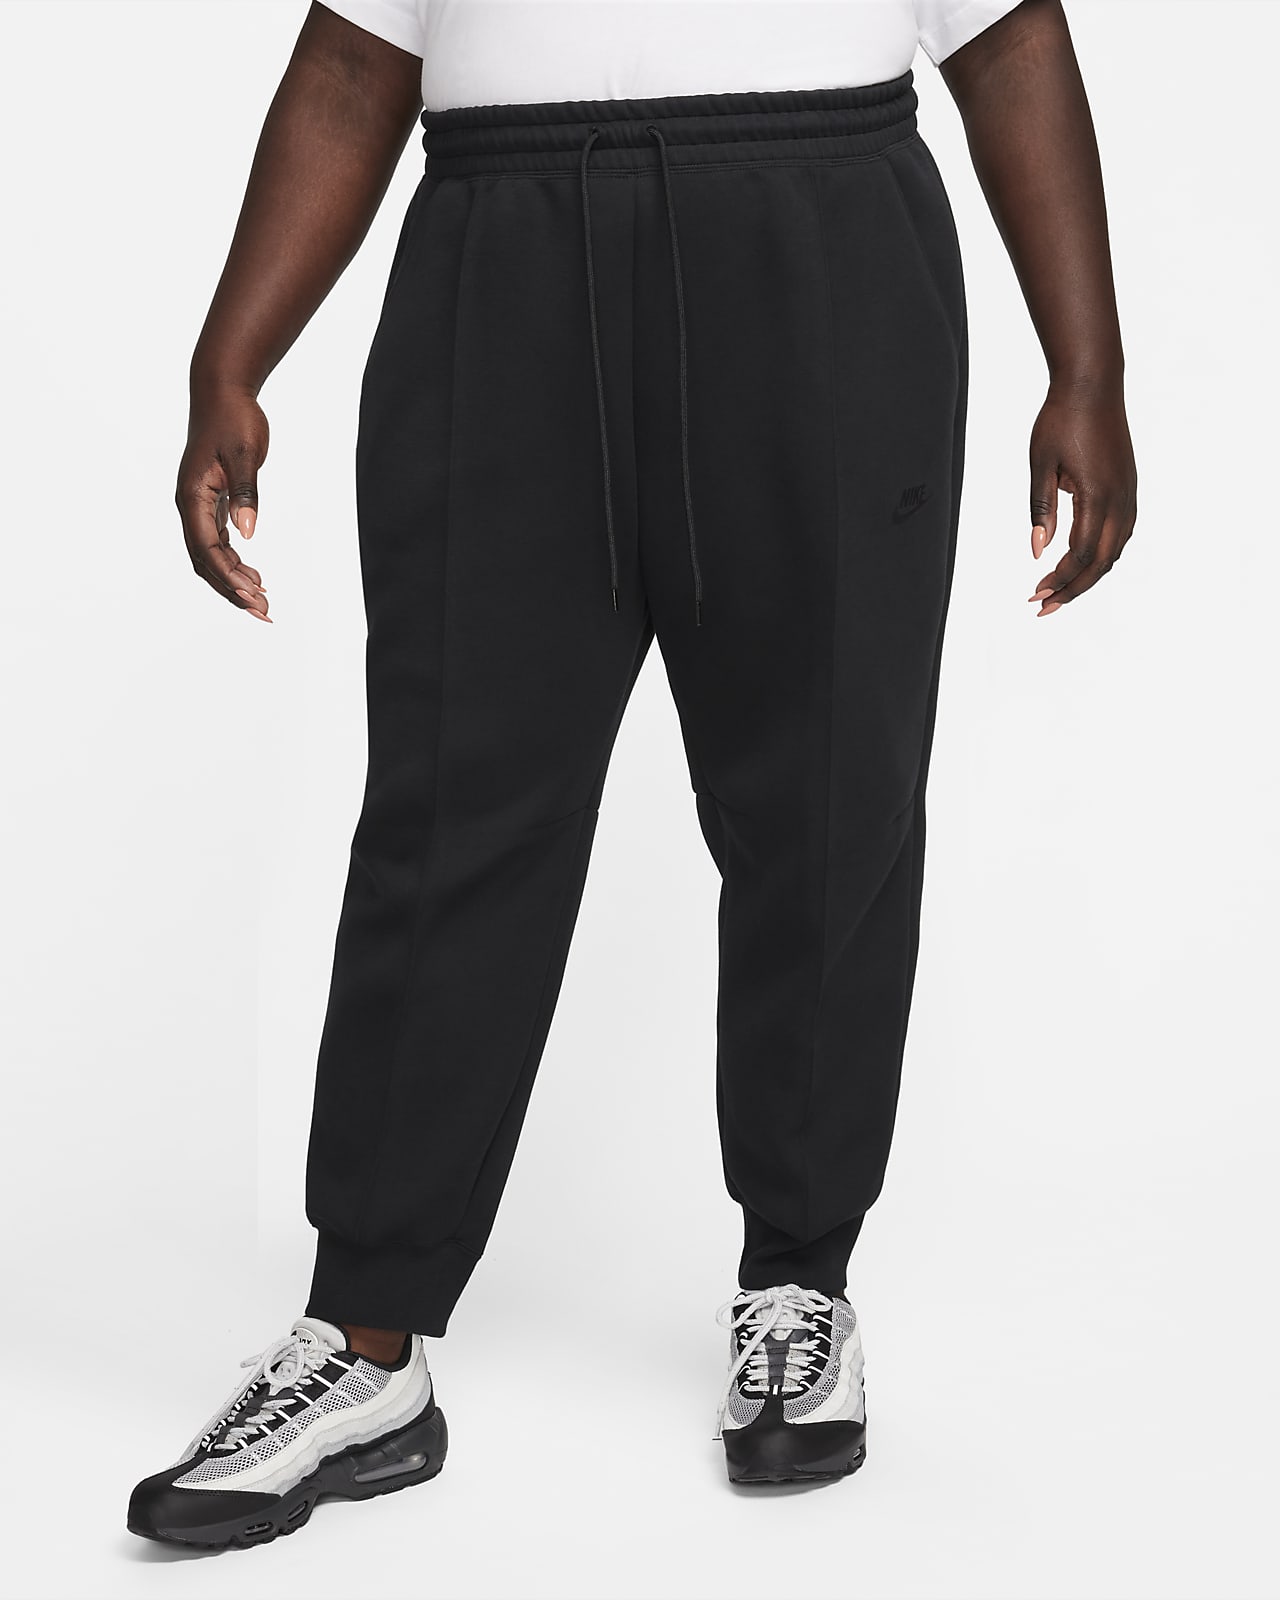 Pantalon de jogging taille mi-haute Nike Sportswear Tech Fleece pour femme (grande taille)